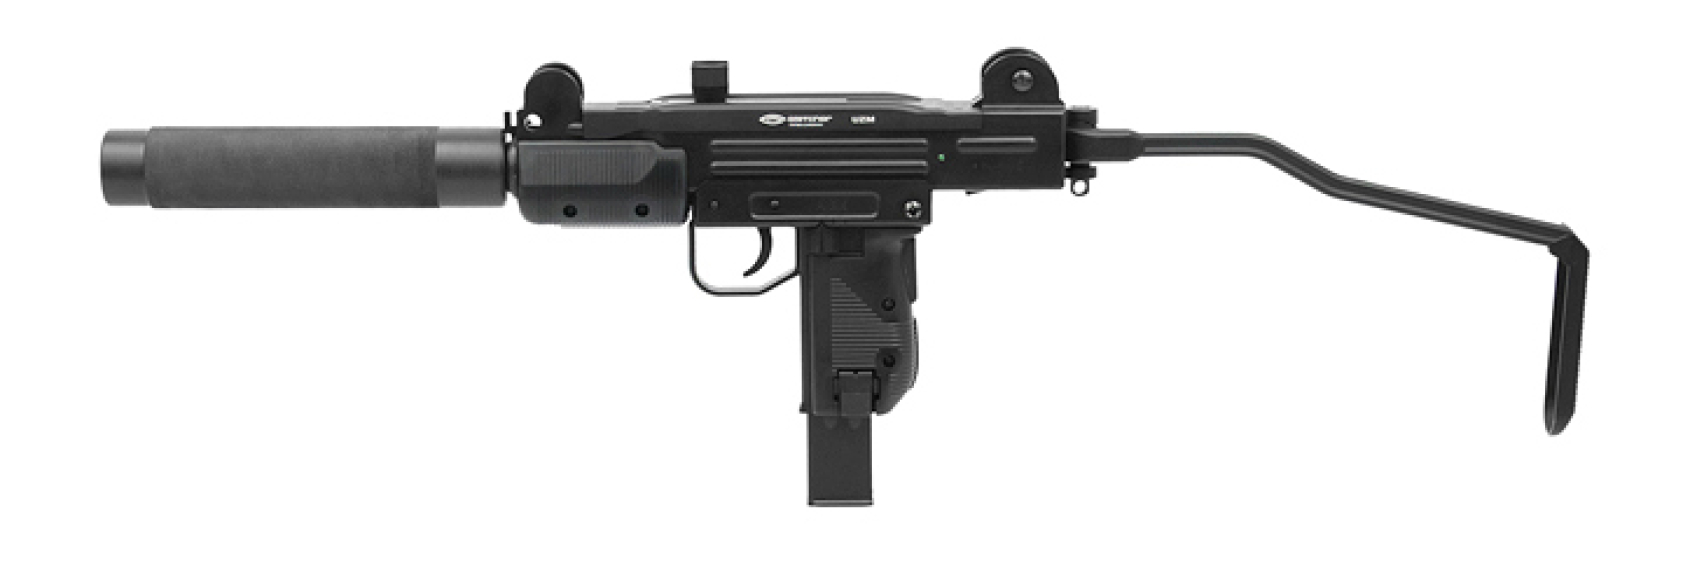 Пистолет-пулемет УЗИ «ЖАЛО» серии «PRACTICAL»